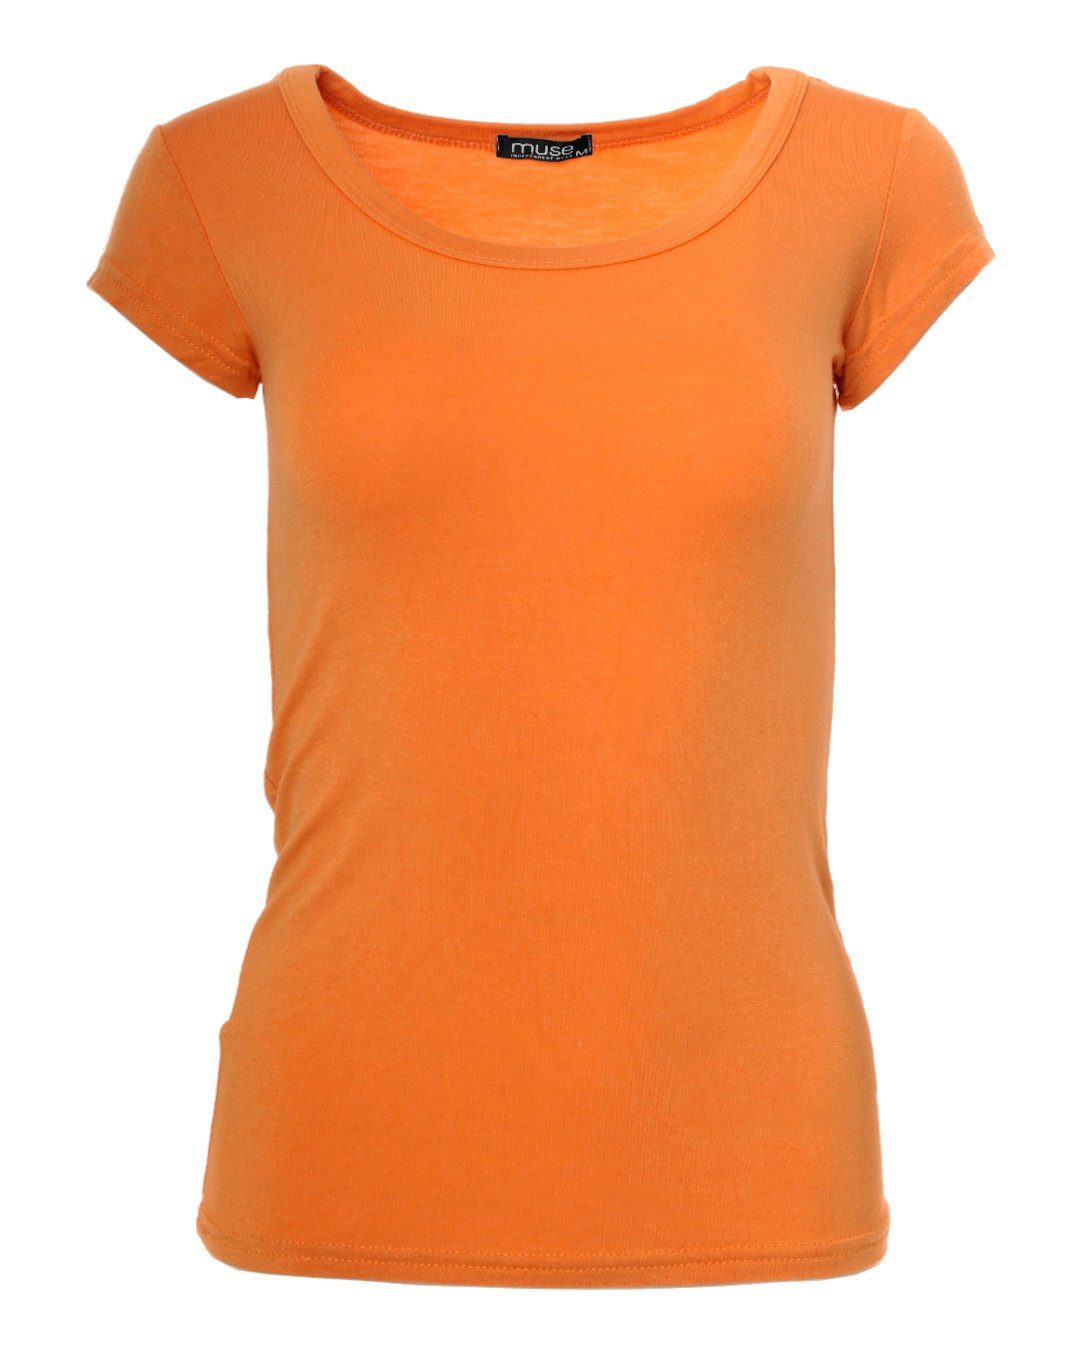 Muse T-Shirt Basic Kurzarm T-Shirt Fit Skinny dunkel-orange 1001